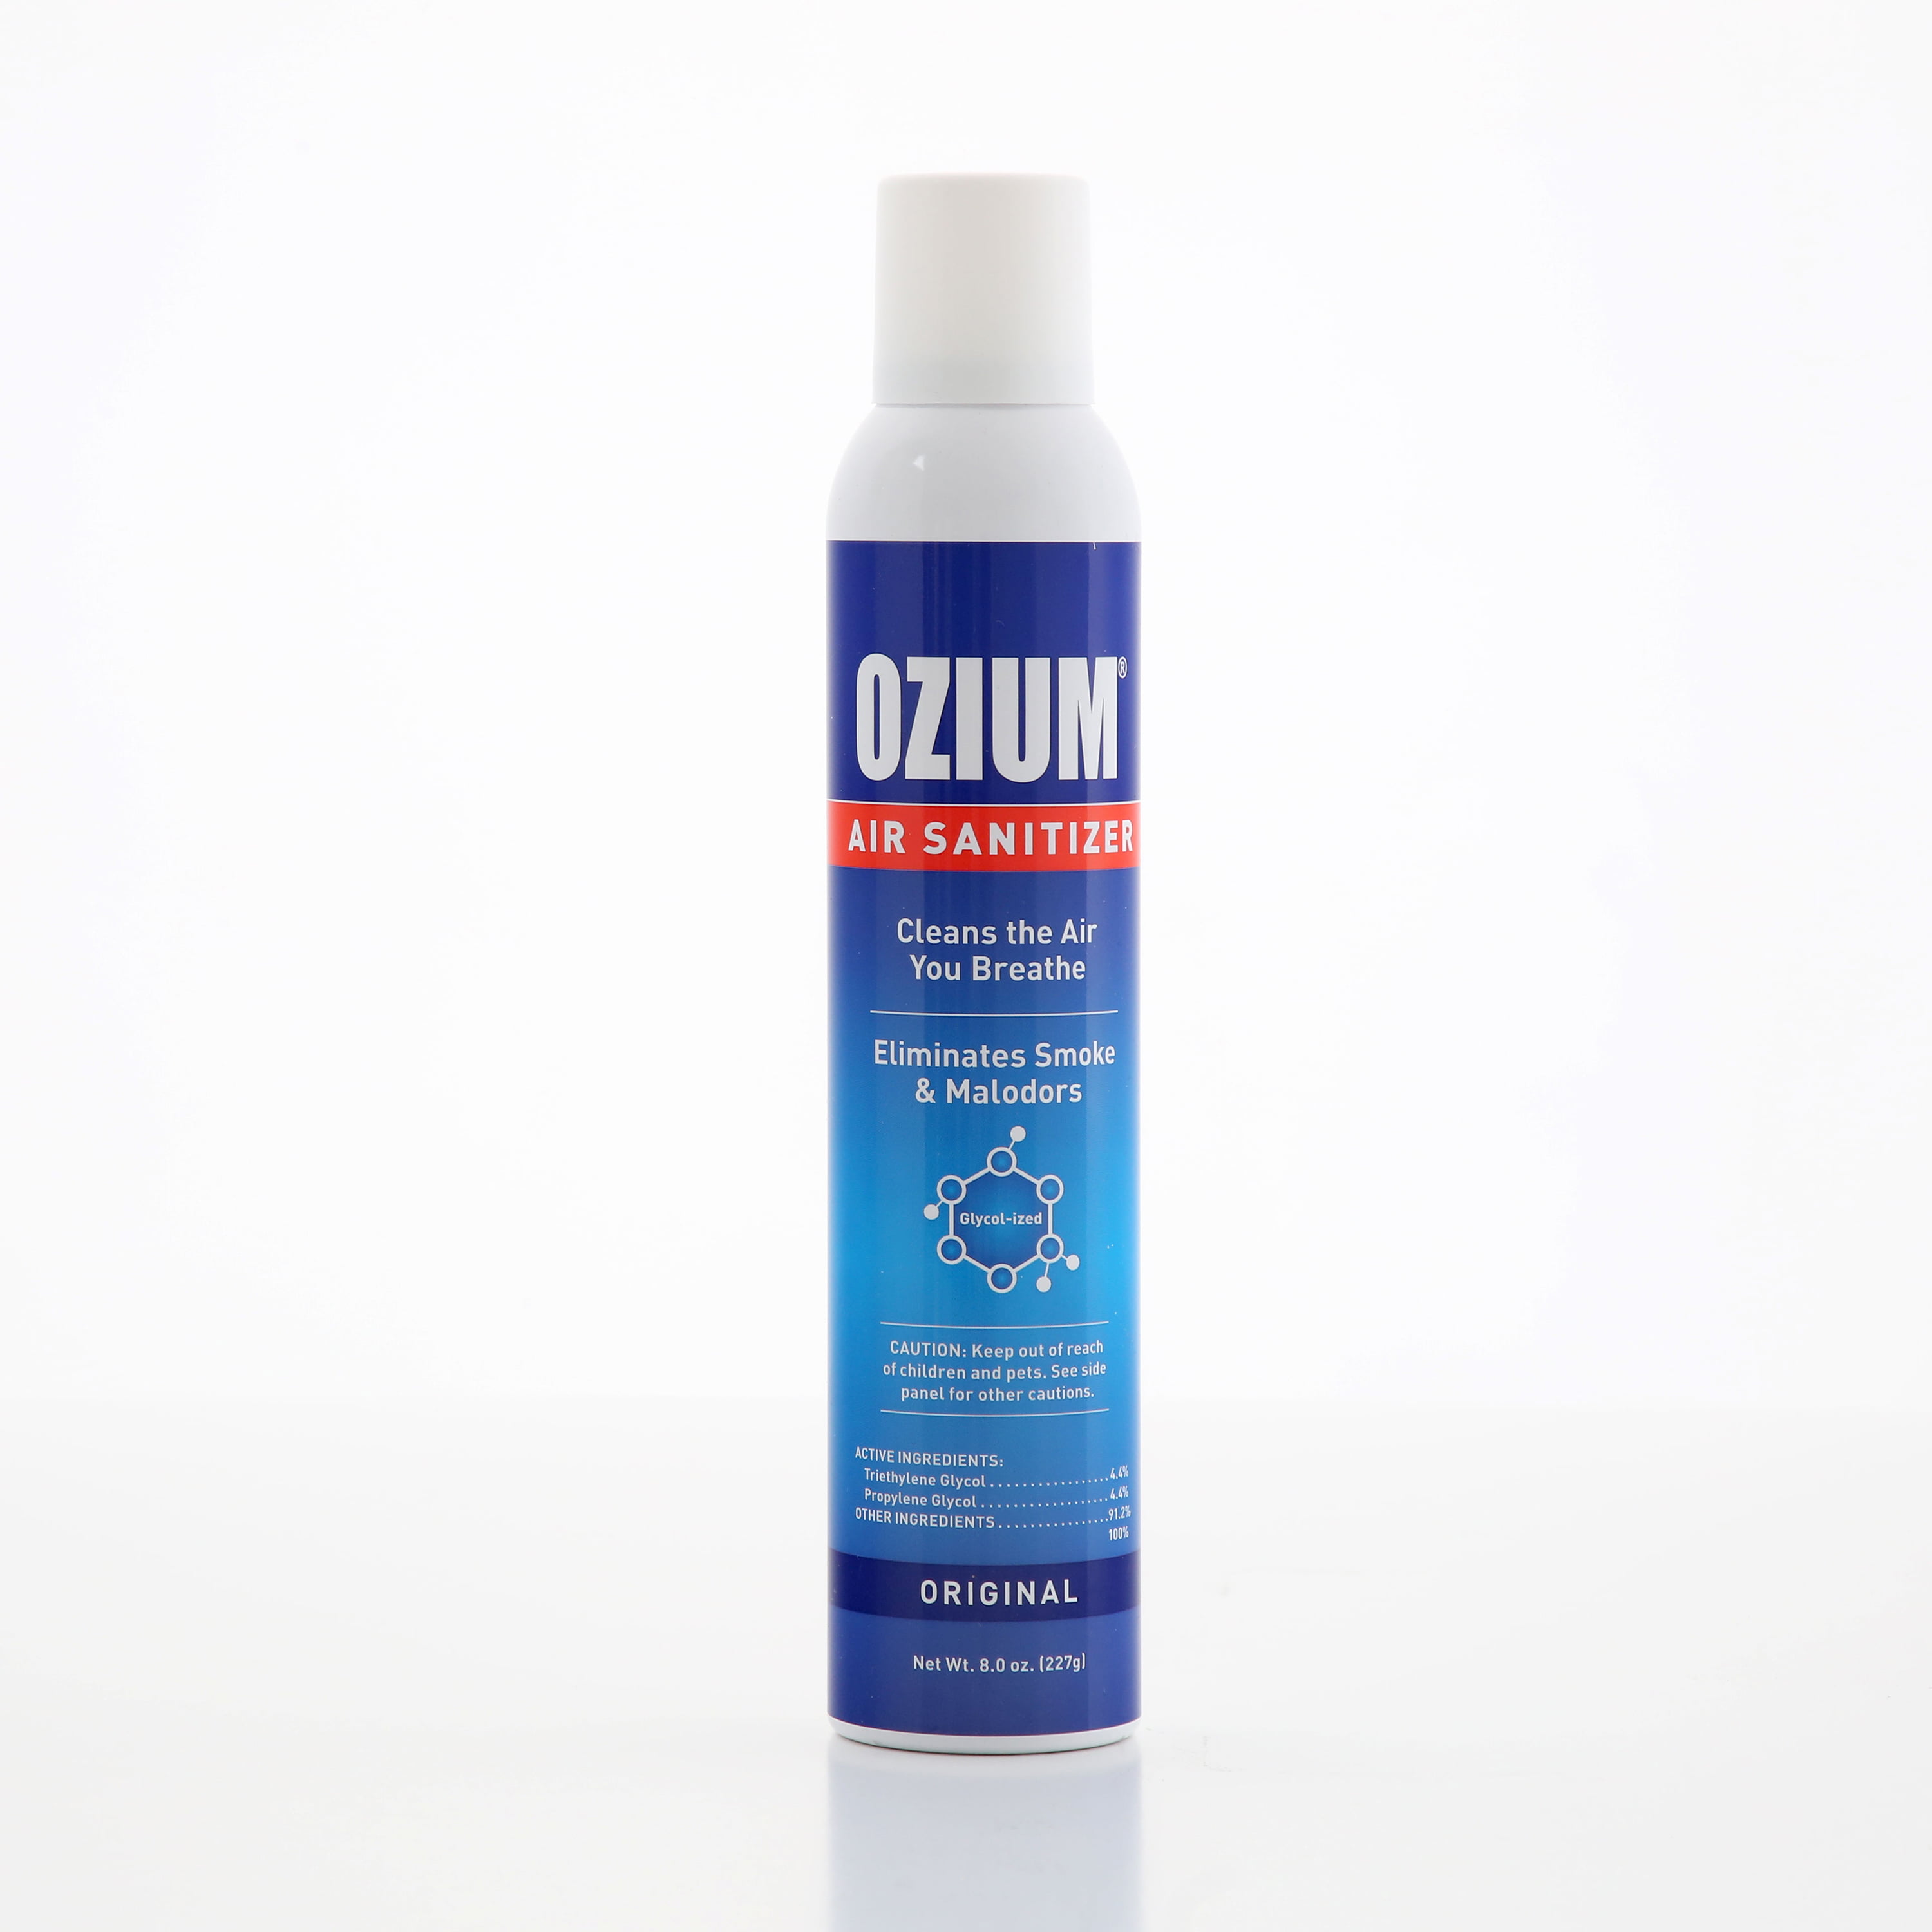 Ozium air sanitizer